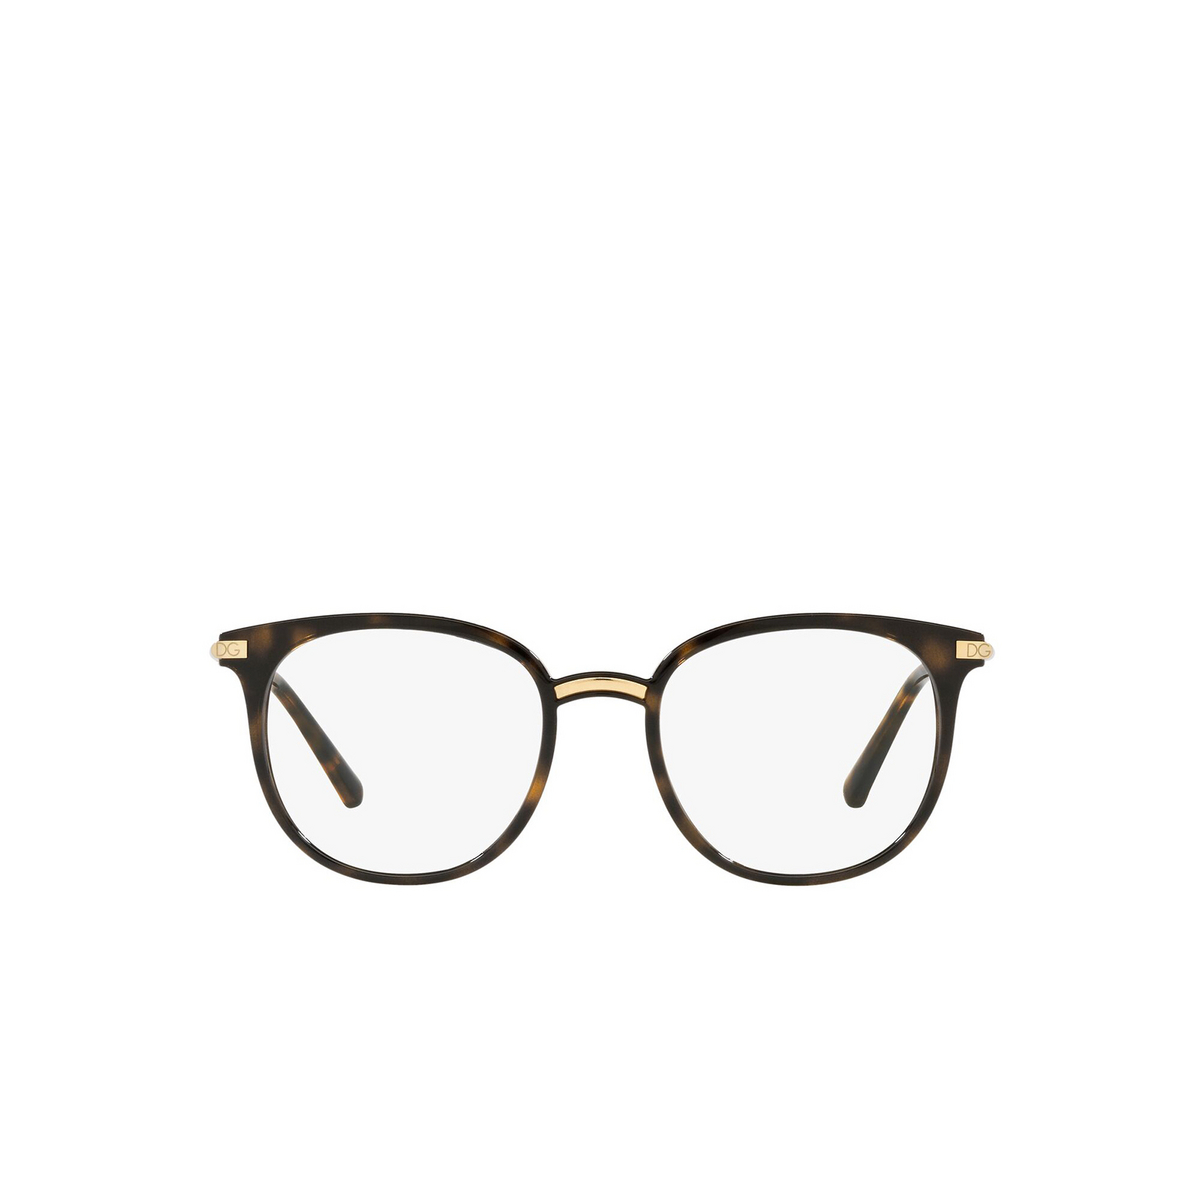 Dolce & Gabbana® Round Eyeglasses: DG5071 color Havana 502 - front view.